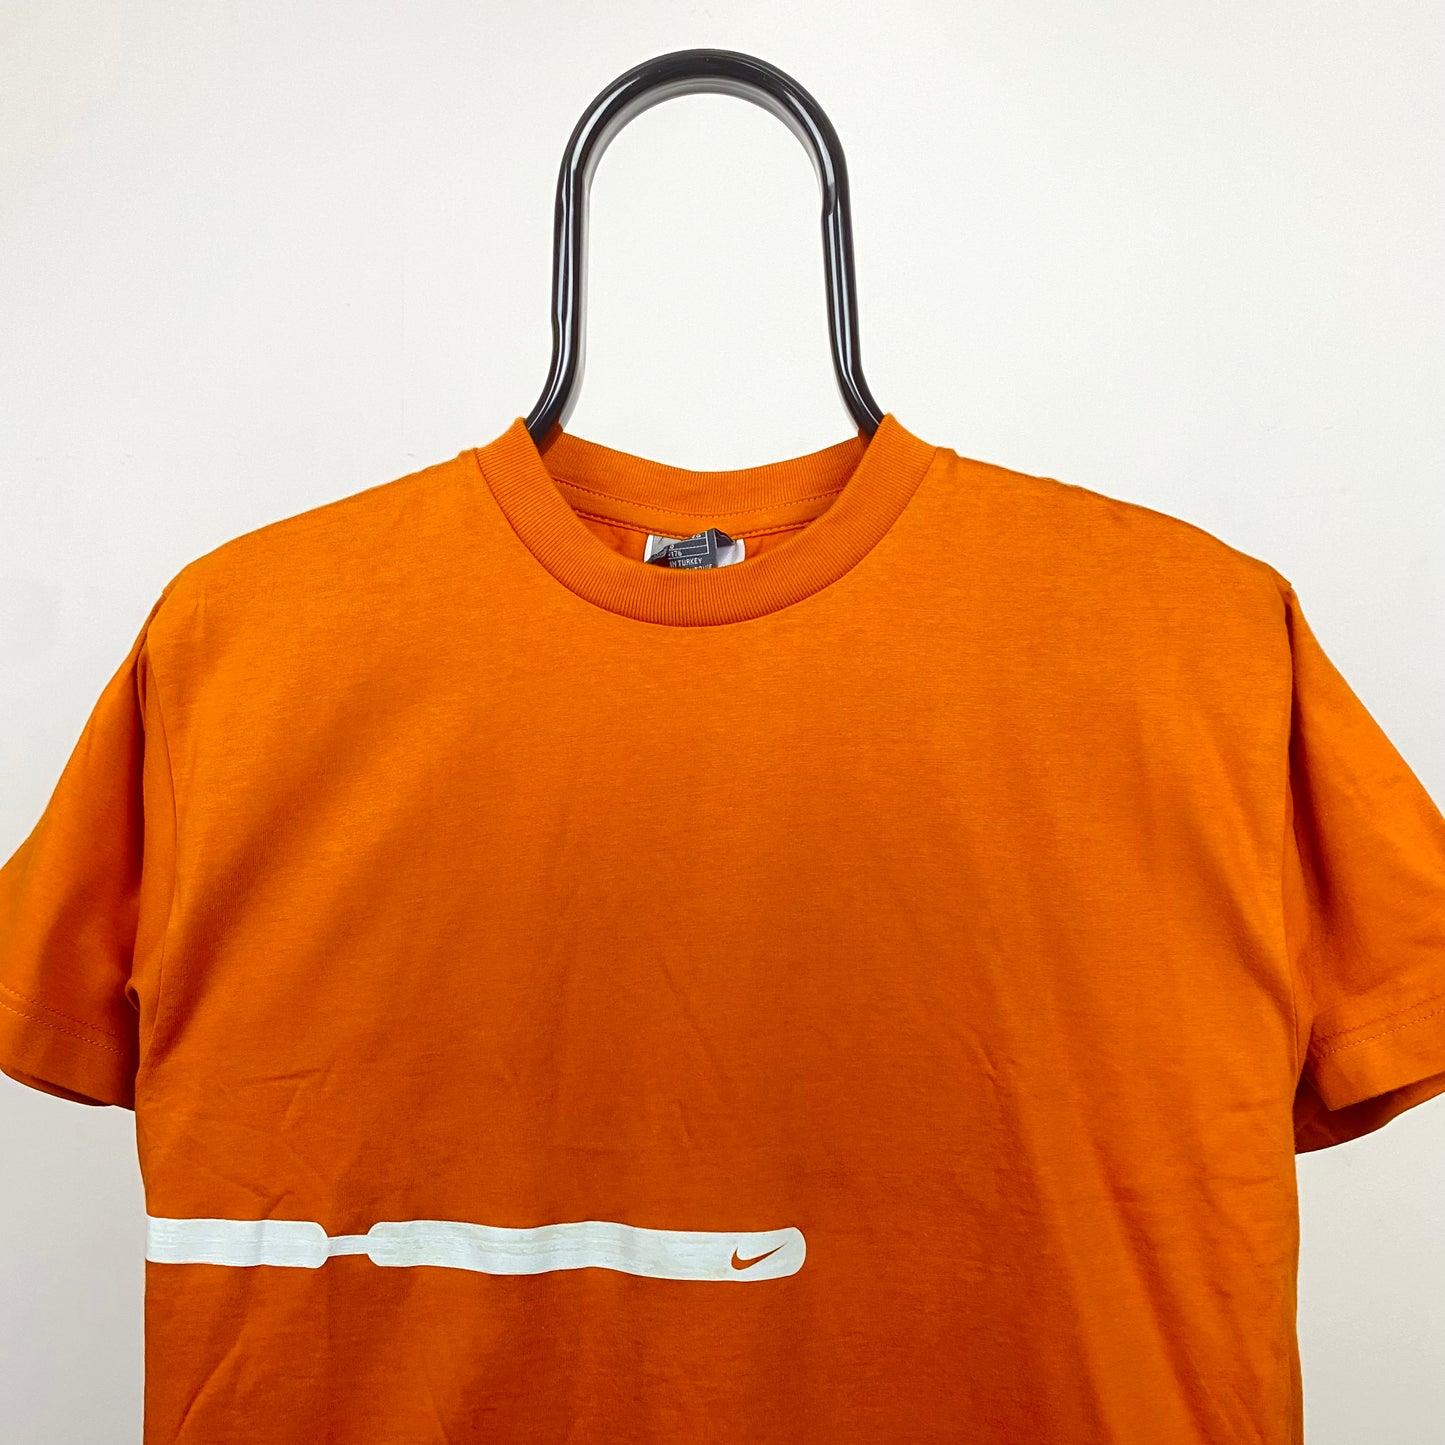 00s Nike JDI T-Shirt Orange XS